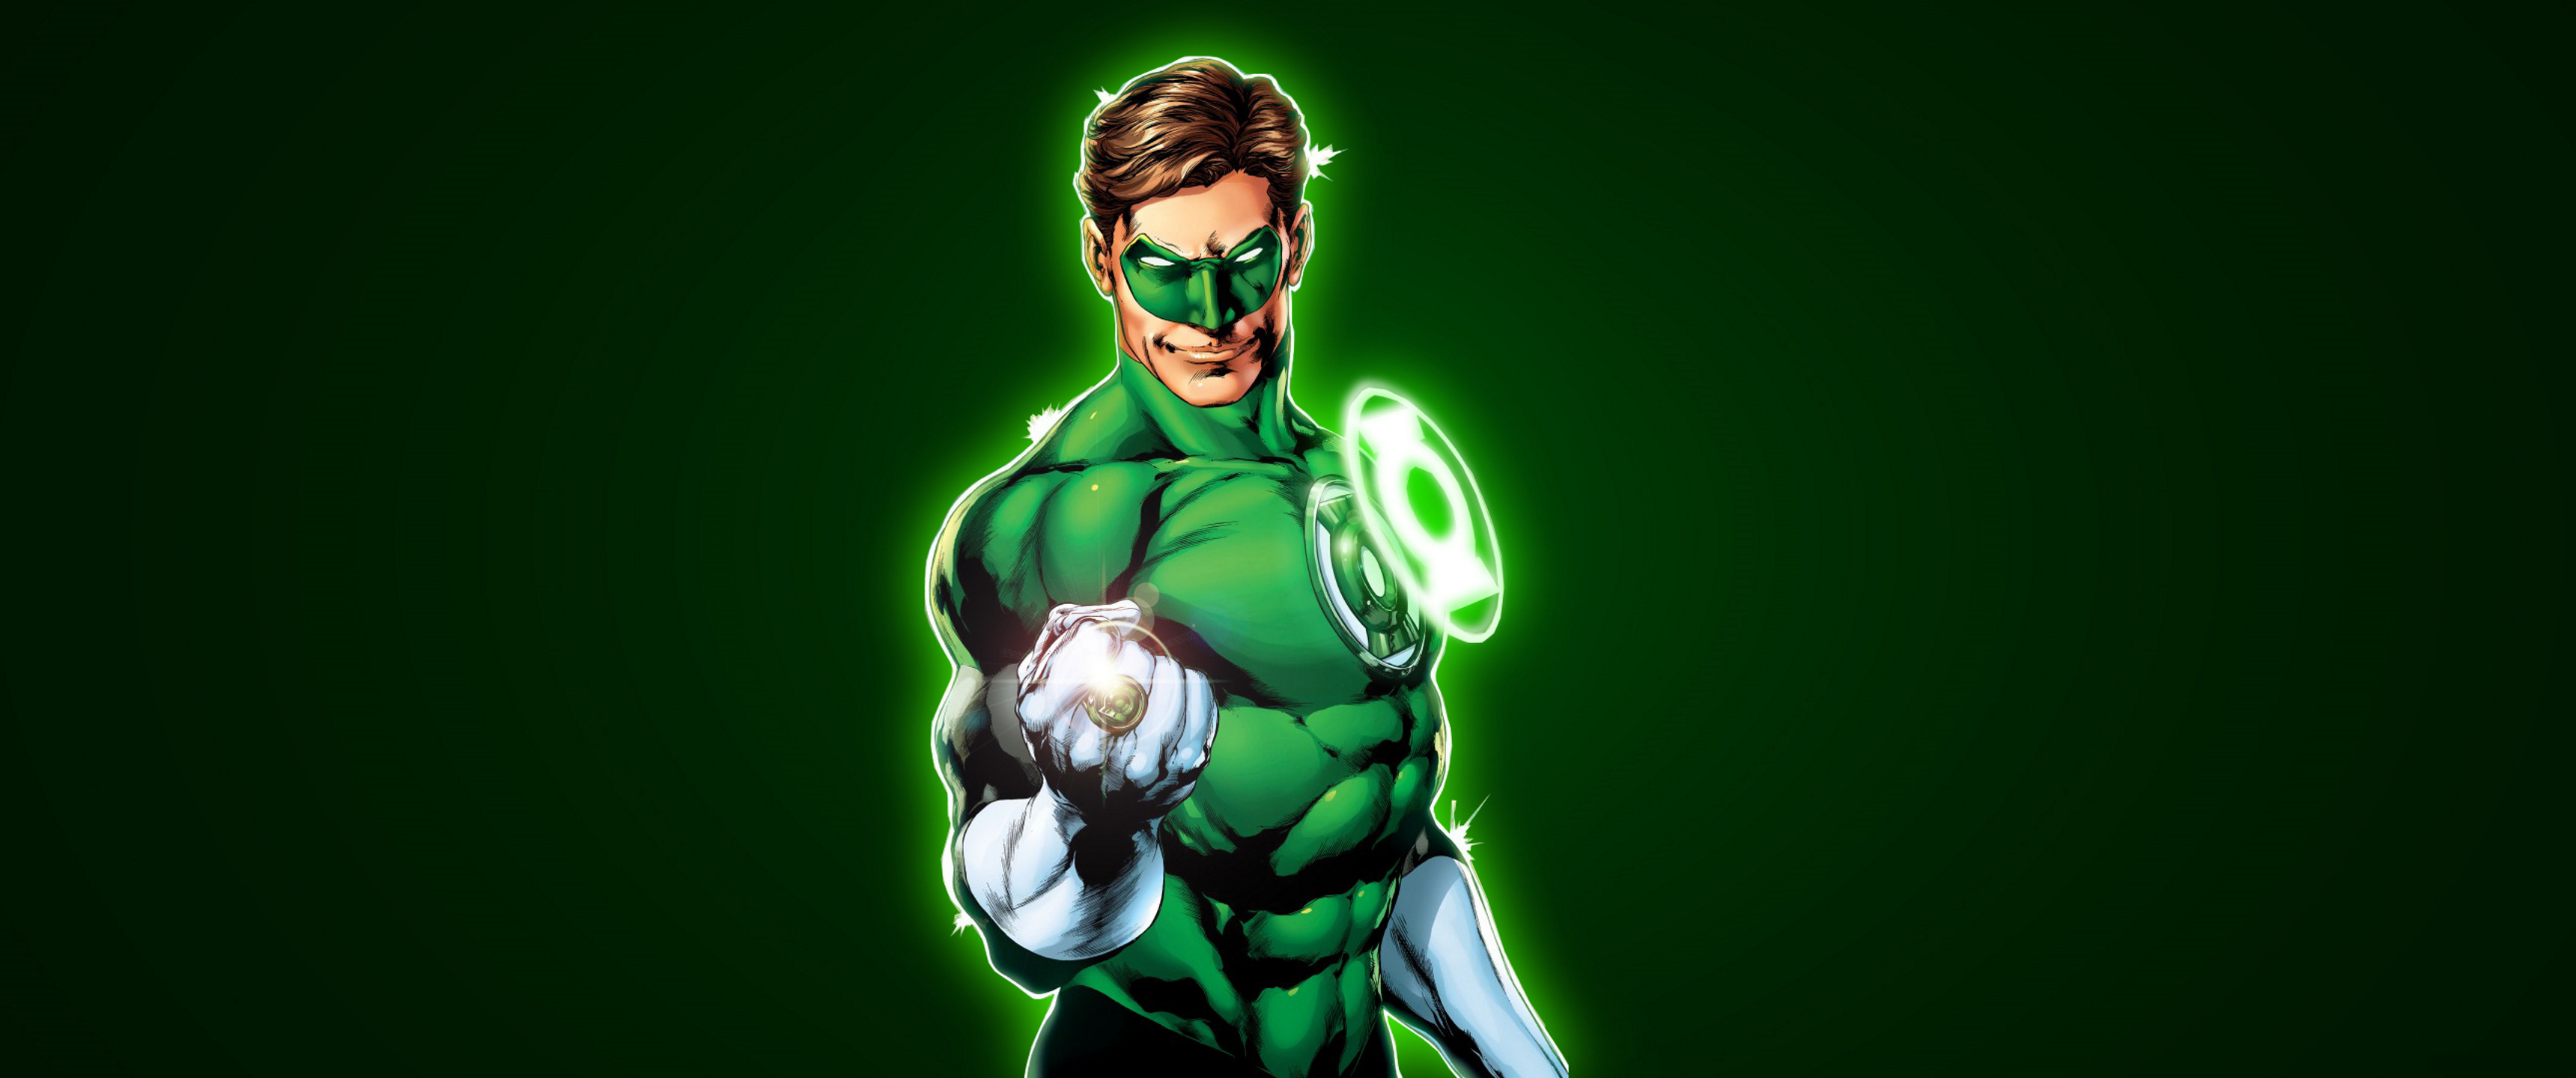 3440x1440 Green Lantern HD Wallpaper | Background Image |  | ID:615218 -  Wallpaper Abyss